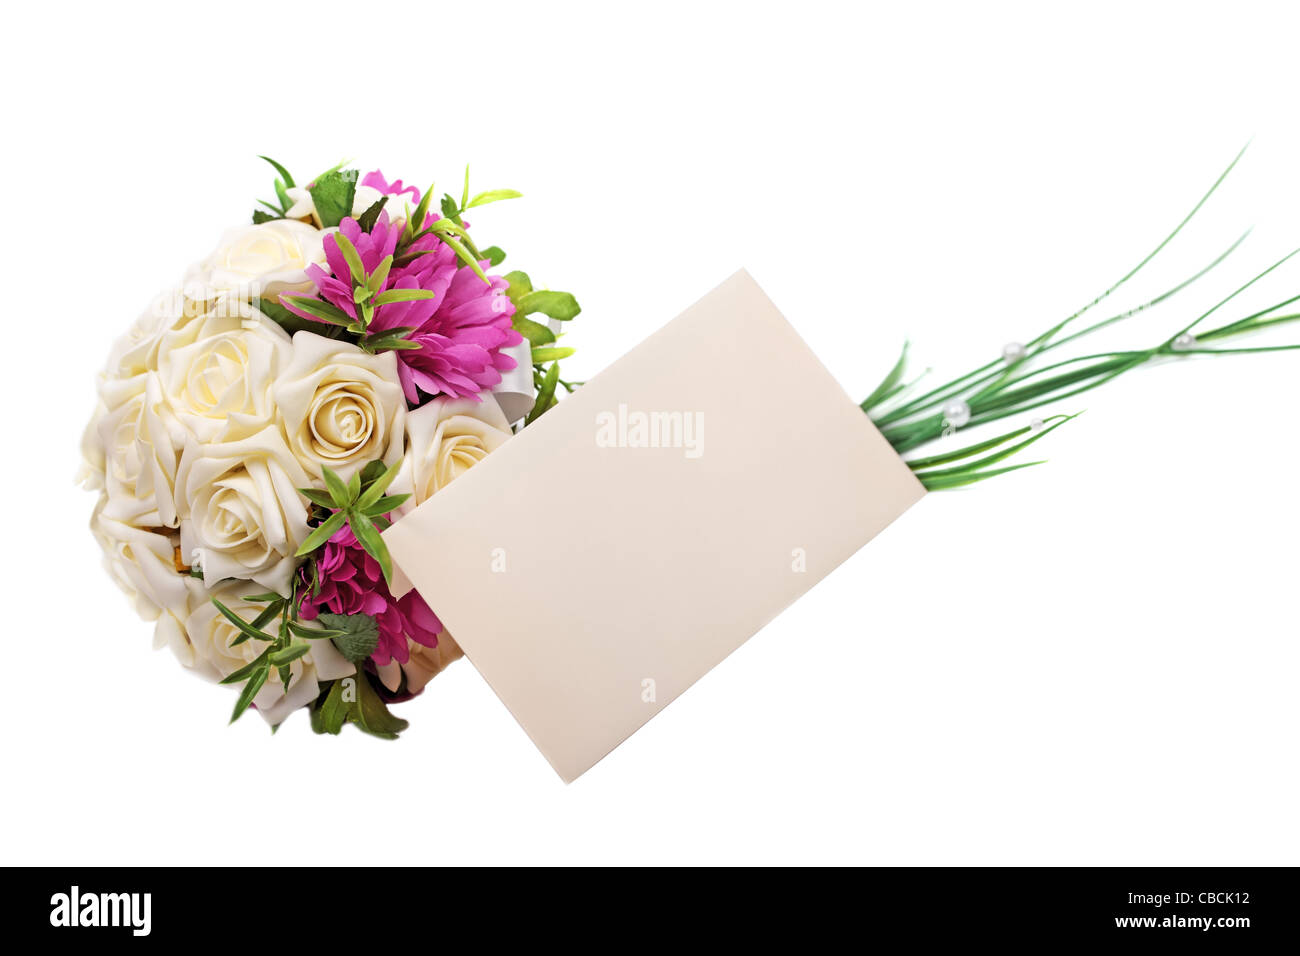 Wedding bouquet and blank envelope isolated on white background. Stock Photo